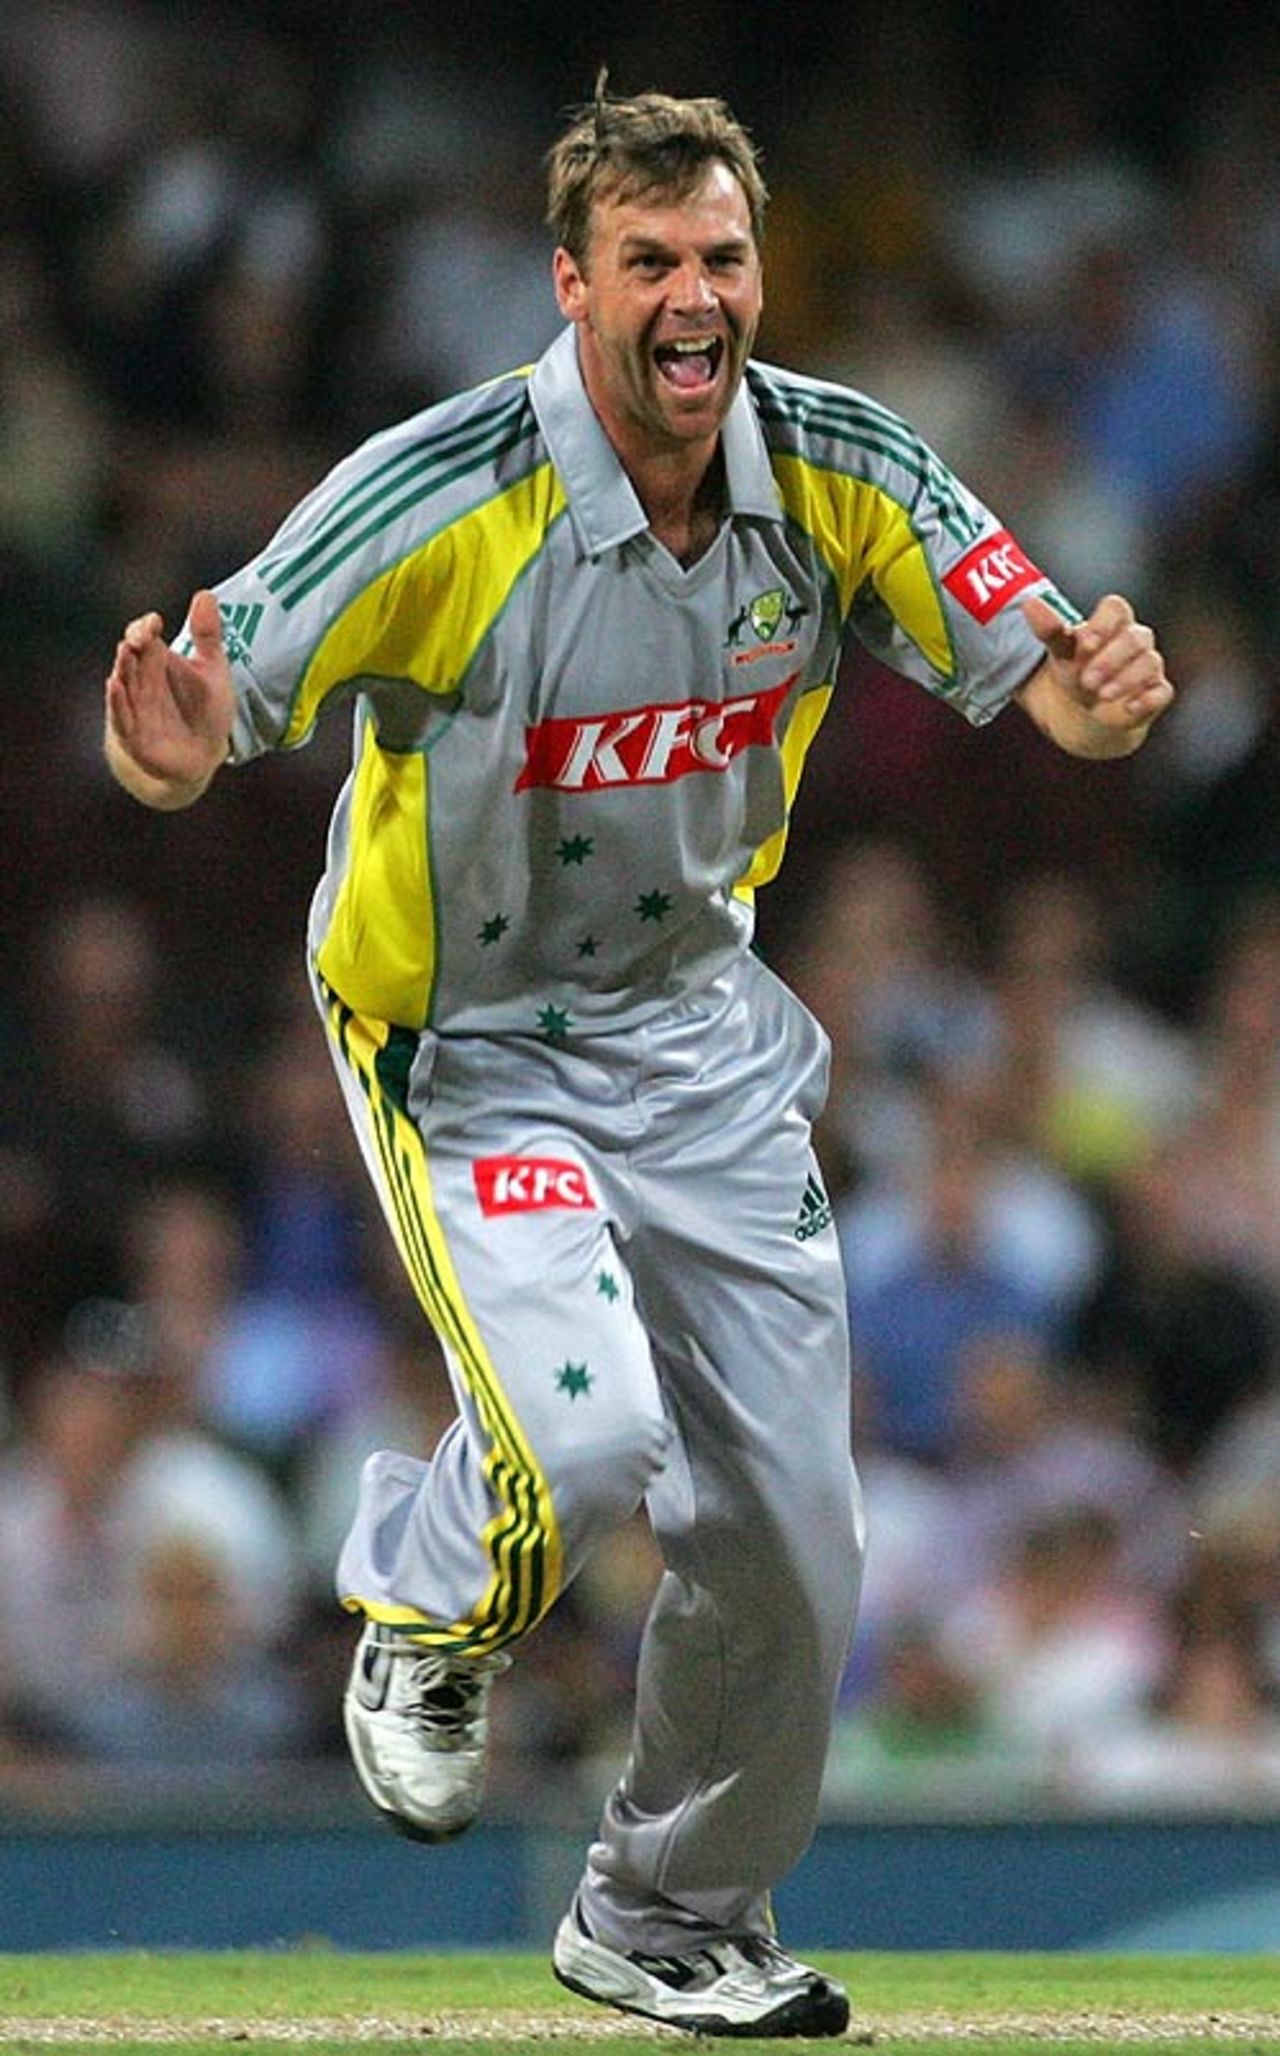 Shane Harwood celebrates his first Twenty20 wicket, Australia v England, Only Twenty 20, Sydney, January 9, 2007